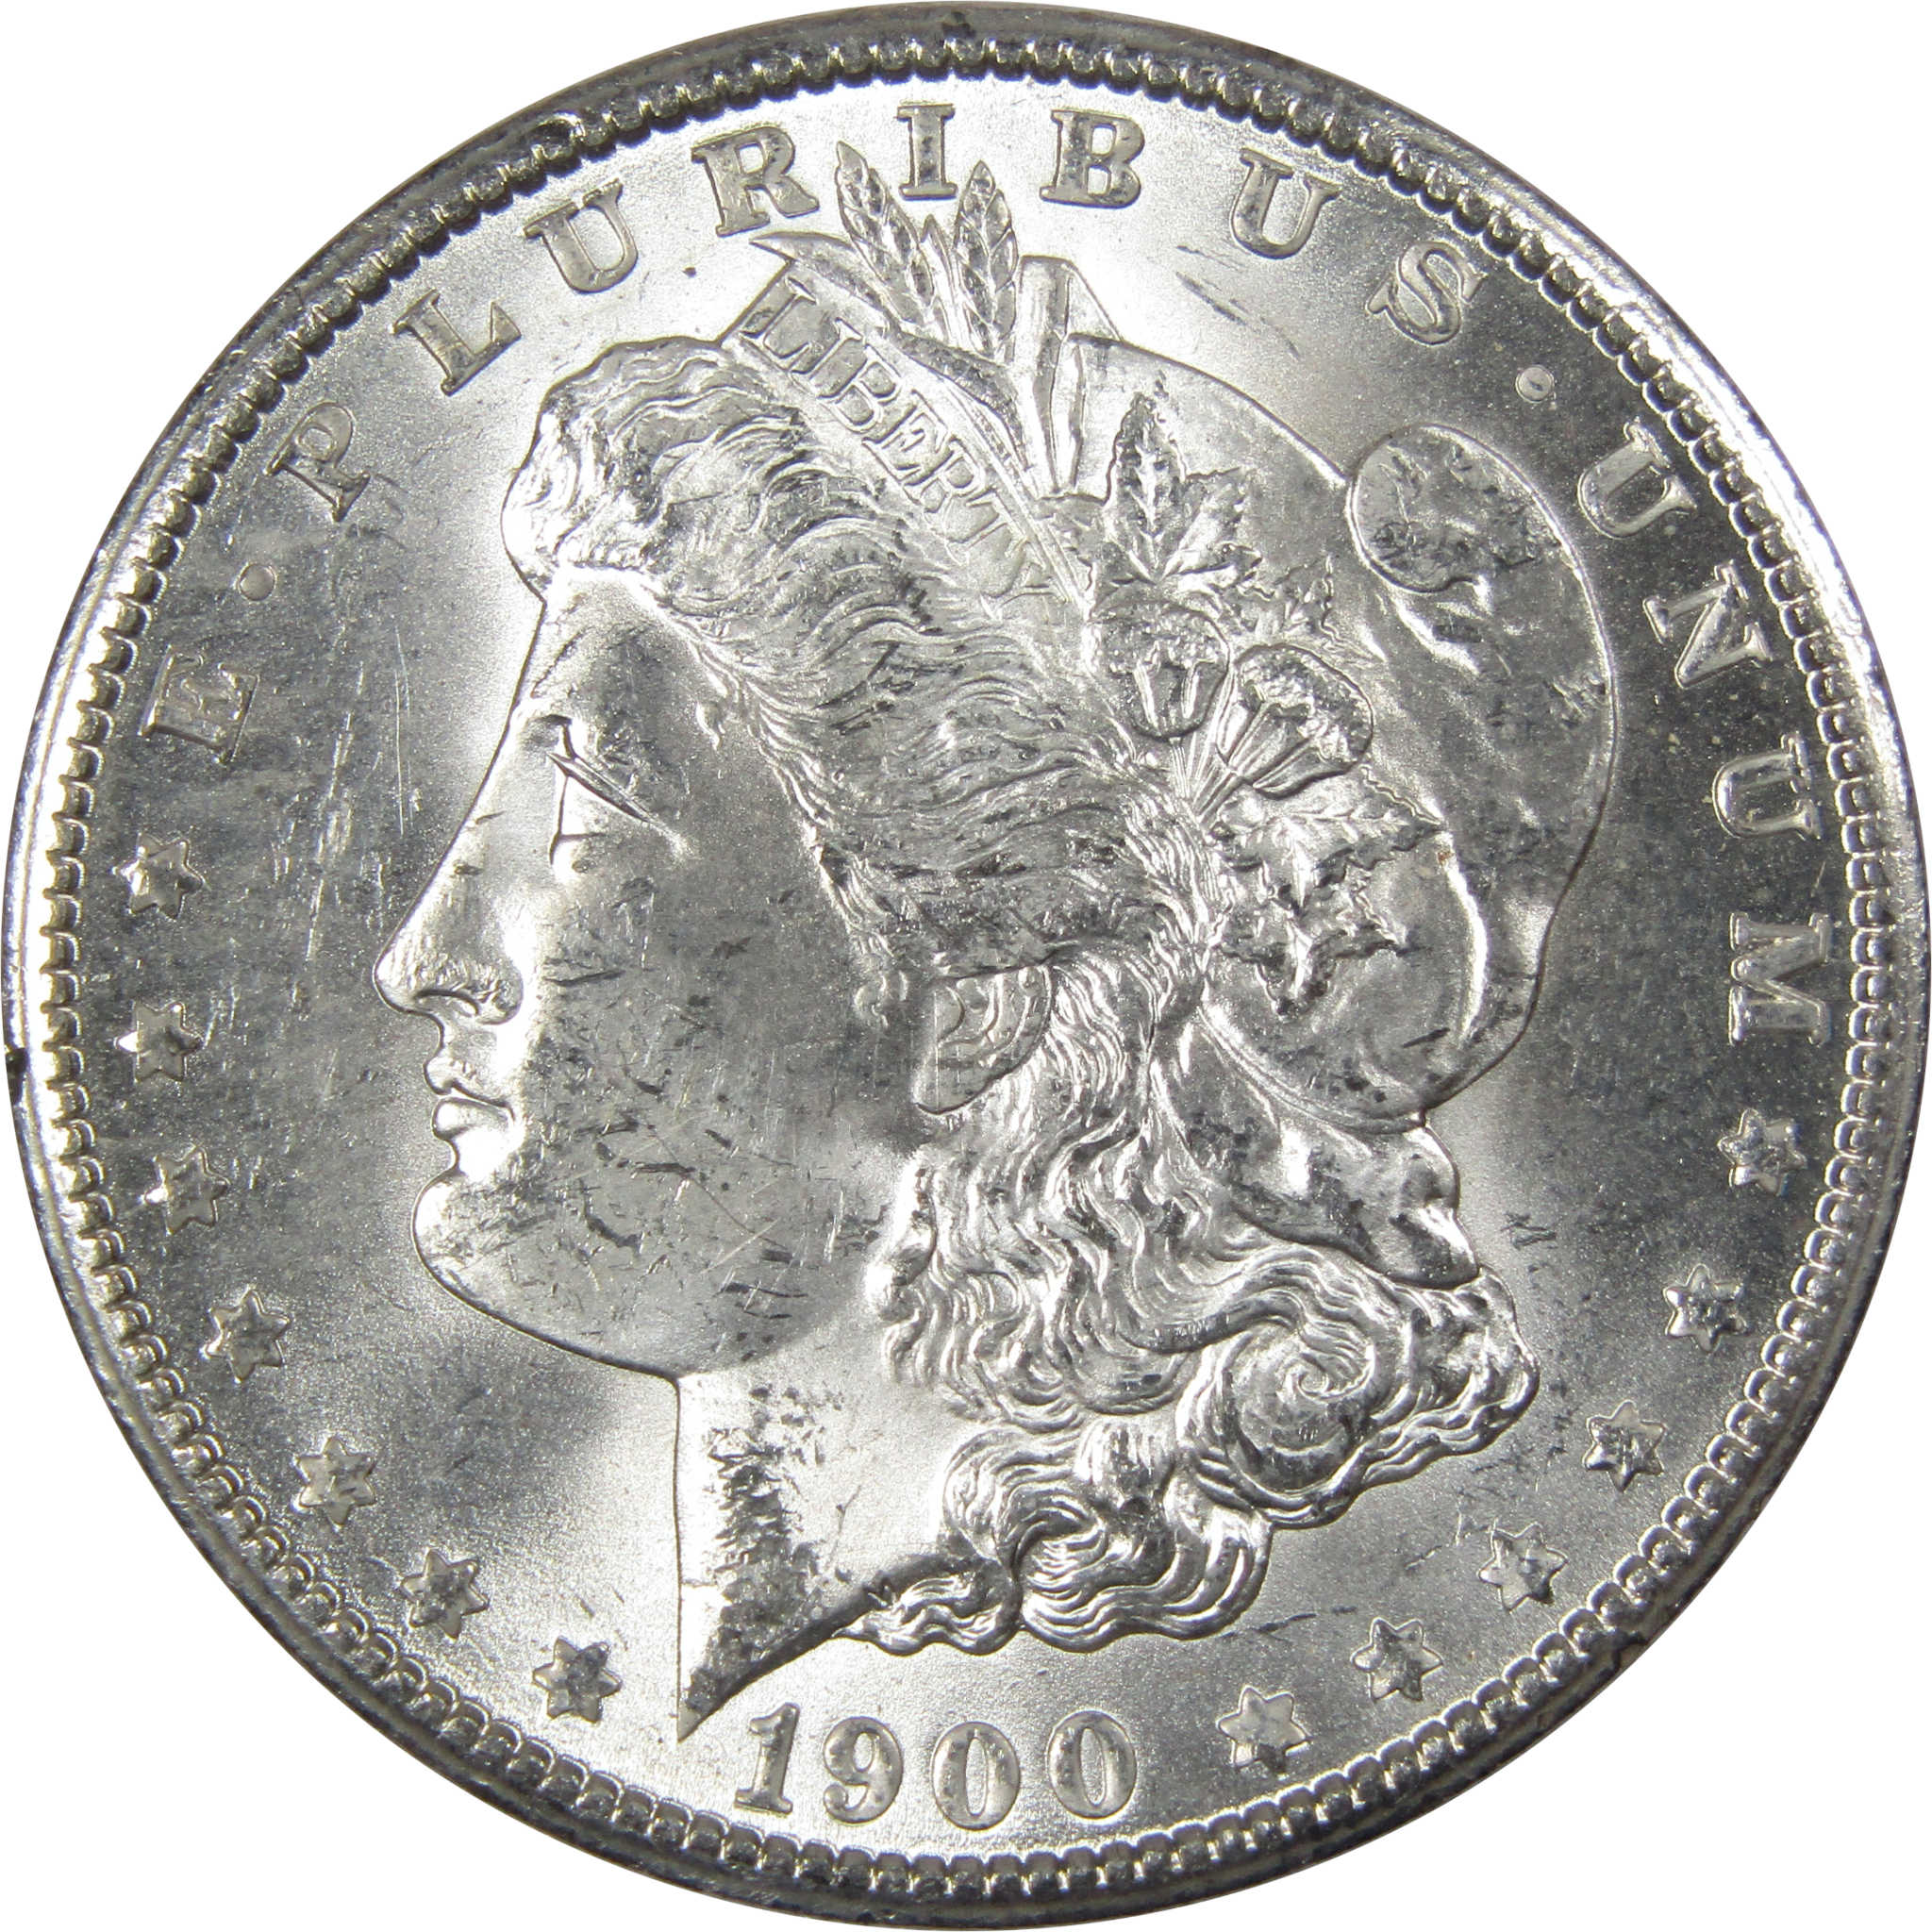 1900 O Morgan Dollar BU Uncirculated Mint State 90% Silver SKU:IPC9744 - Morgan coin - Morgan silver dollar - Morgan silver dollar for sale - Profile Coins &amp; Collectibles